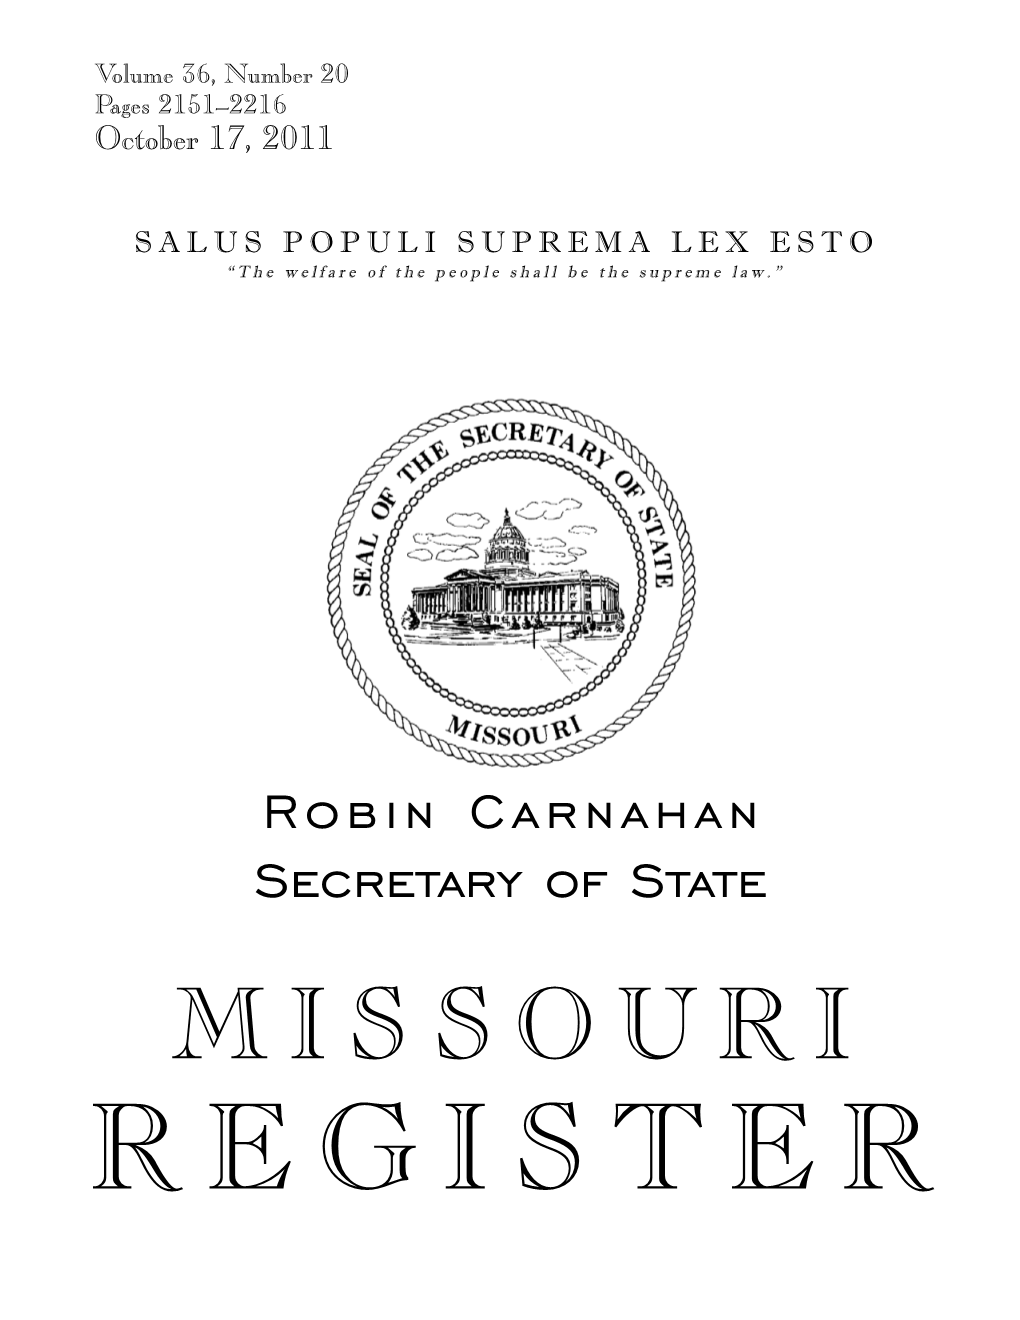 Missouri Secretary of State: Missouri Register